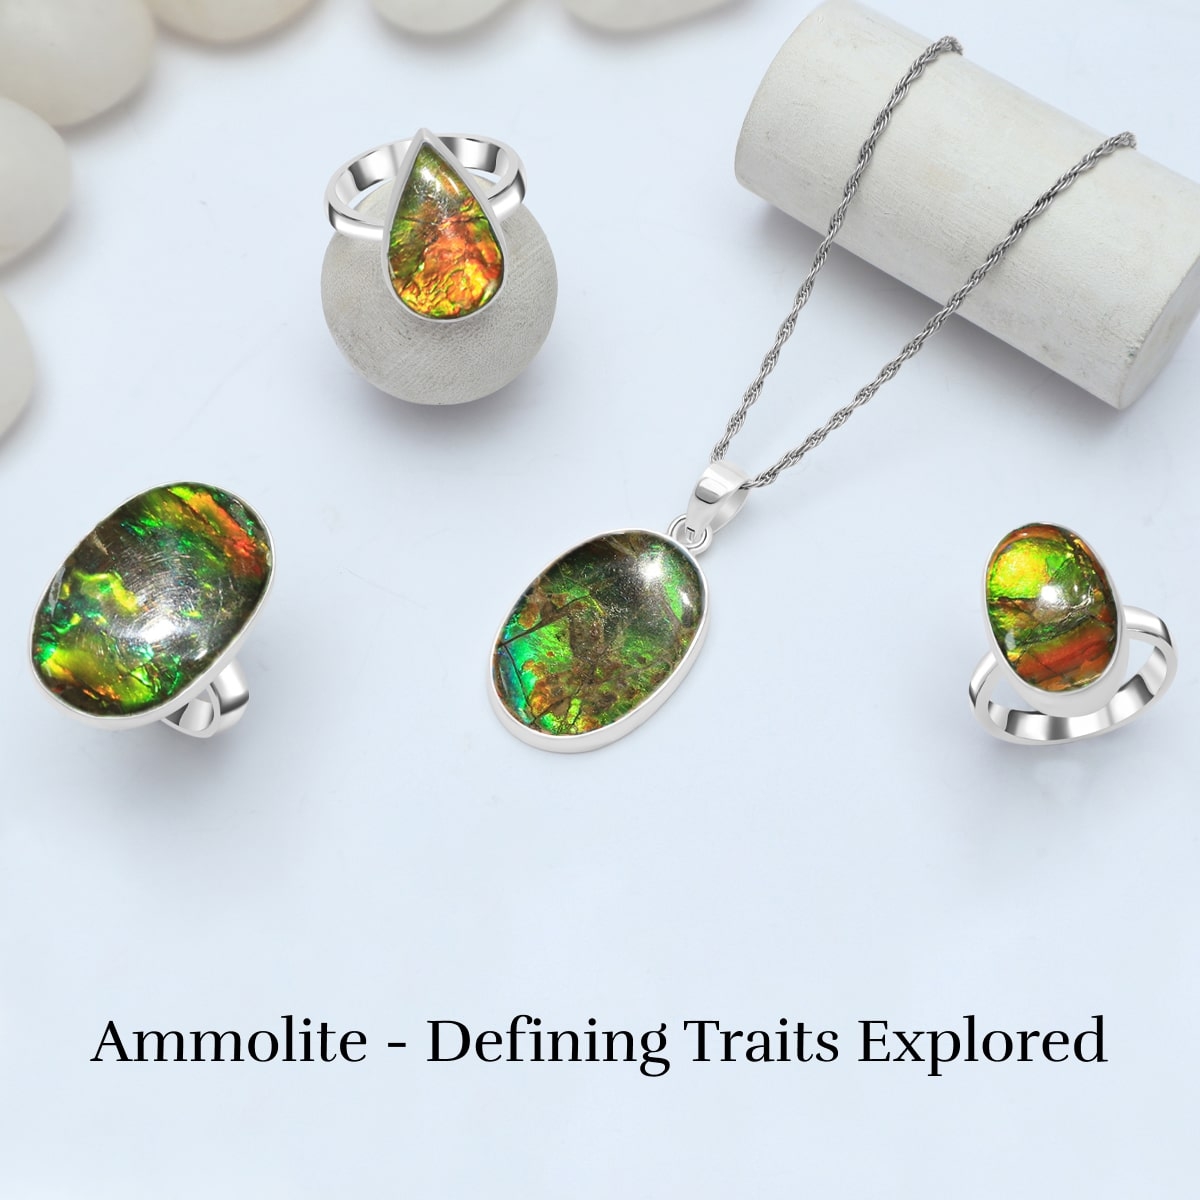 The Key Characteristics of Ammolite